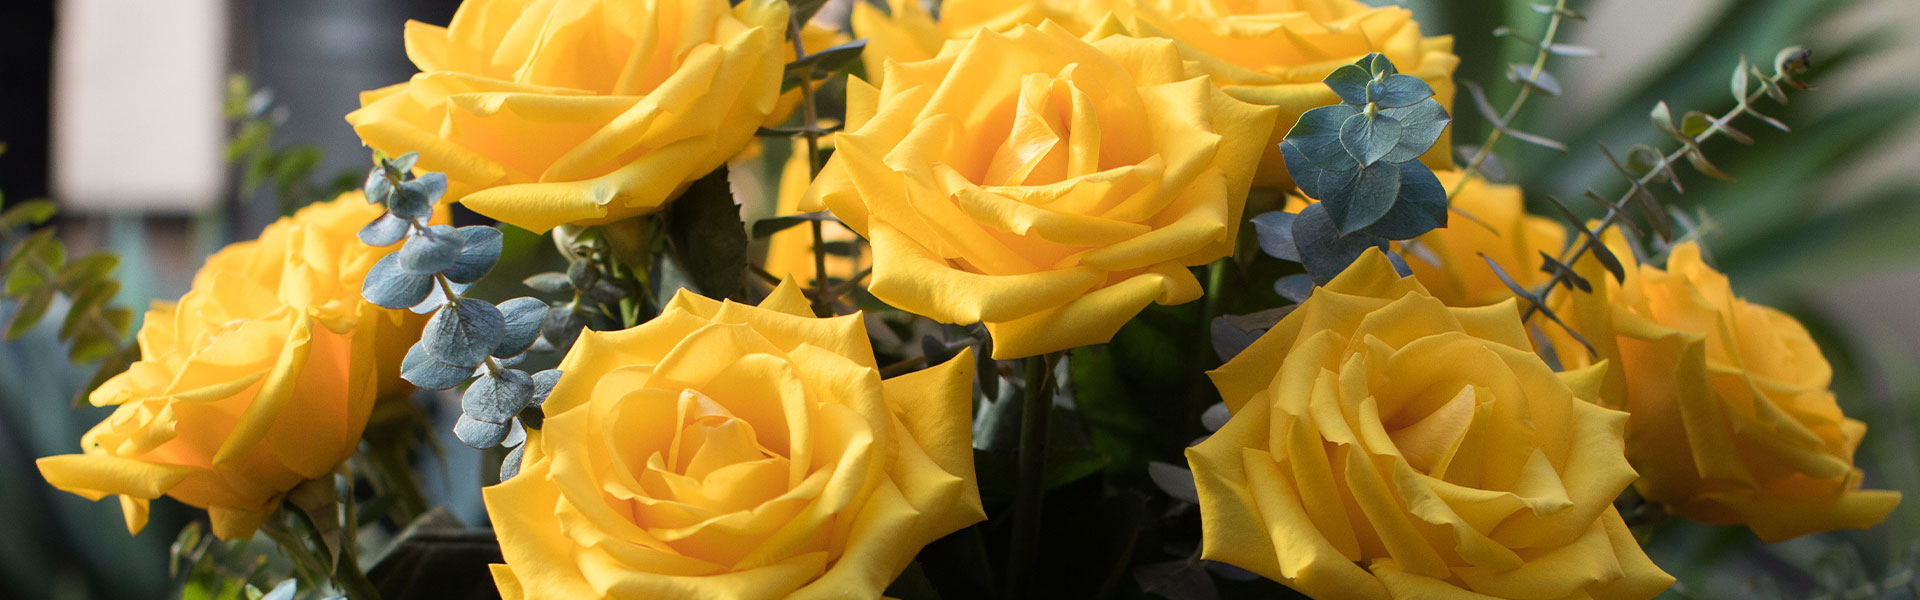 6 Symbolic Flowers to Gift on International Women's Day